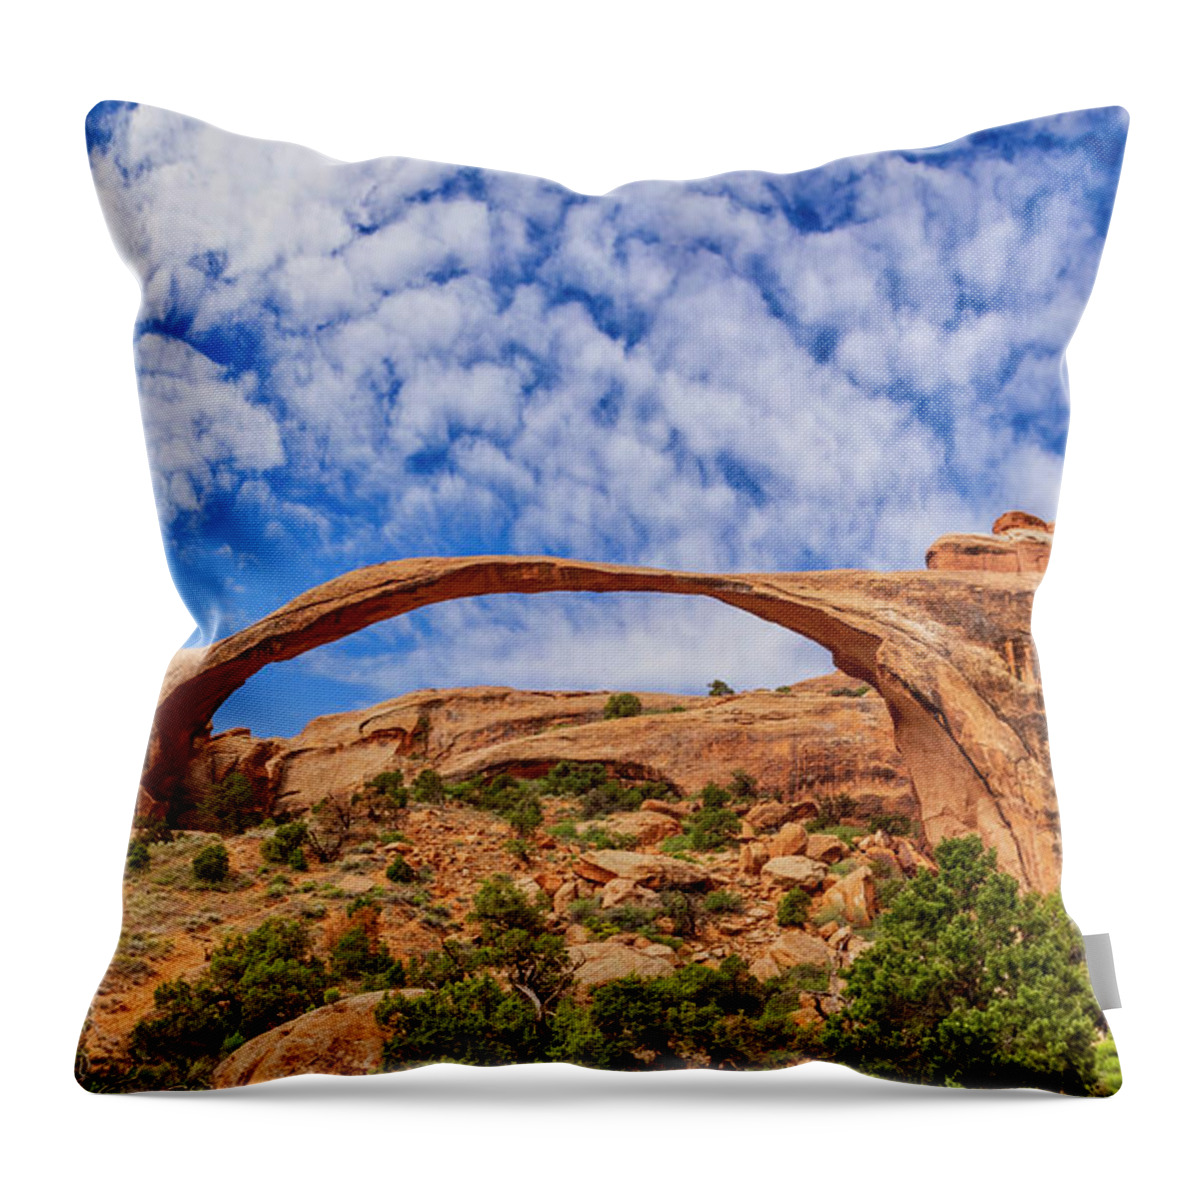 Arch Throw Pillow featuring the photograph Landscape Arch by Jurgen Lorenzen